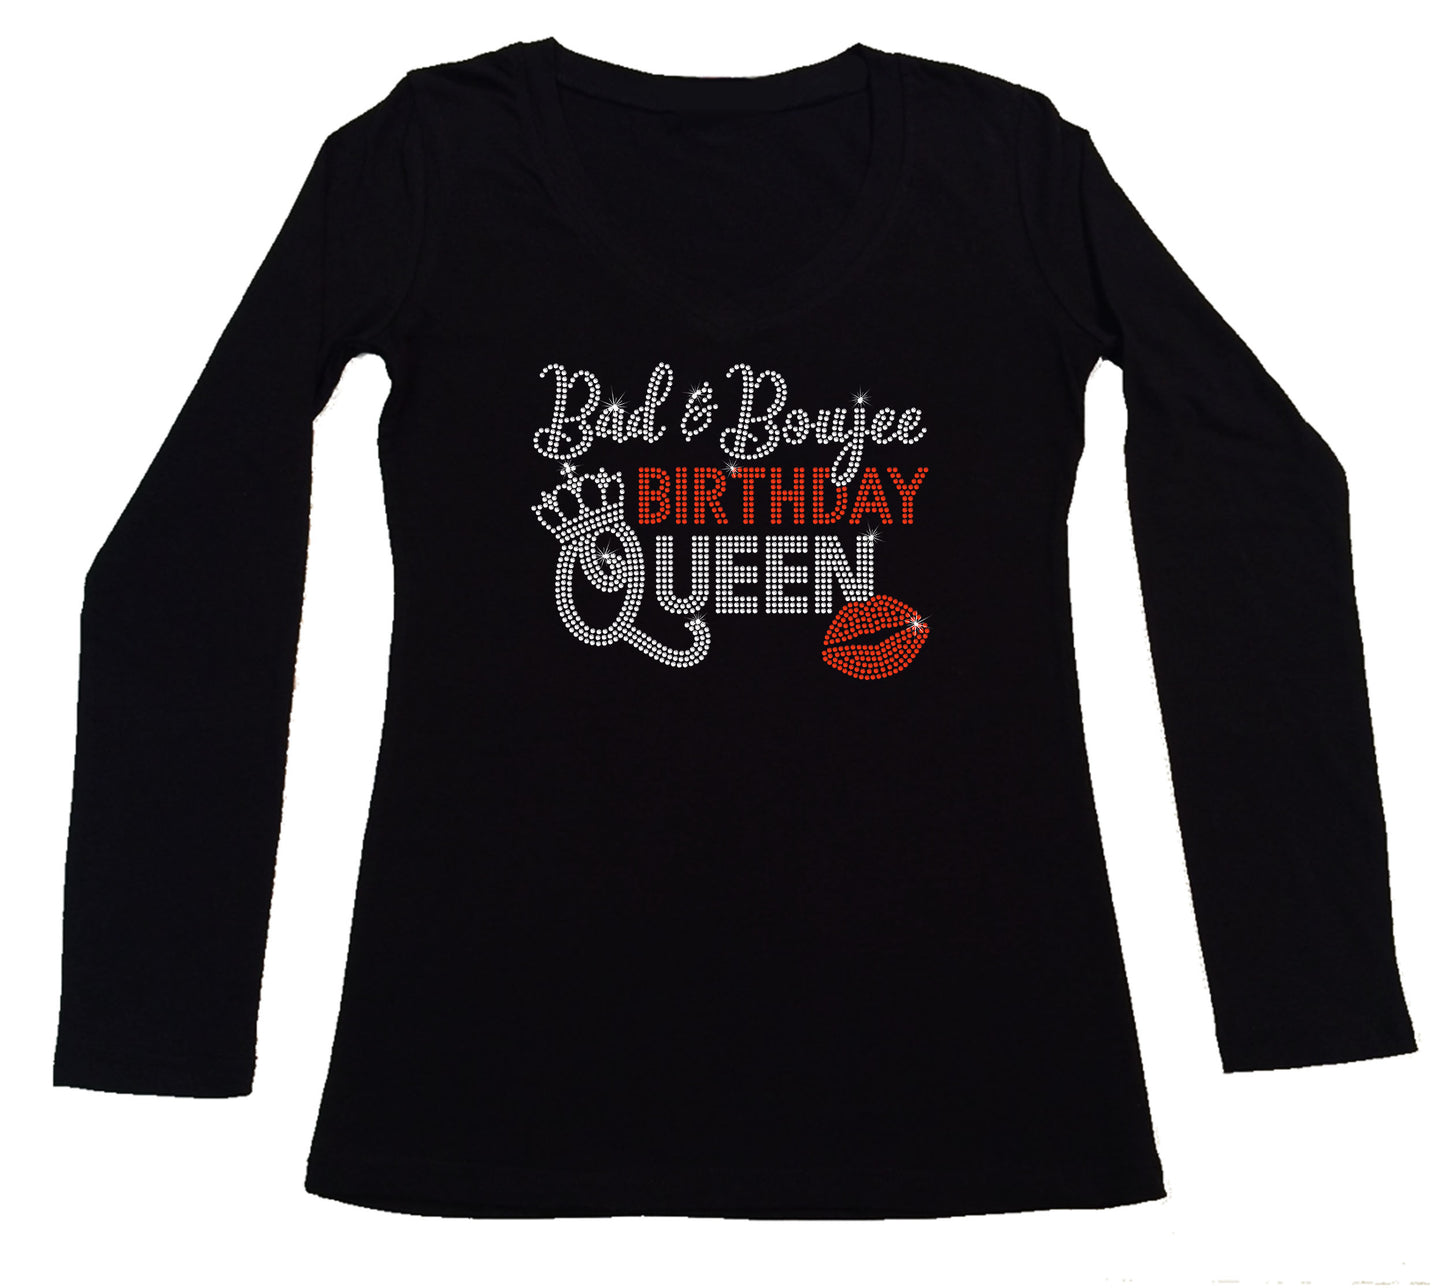 Women's Rhinestone Fitted Tight Snug Bad and Boujee Birthday Queen - Rhinestone Birthday Shirt